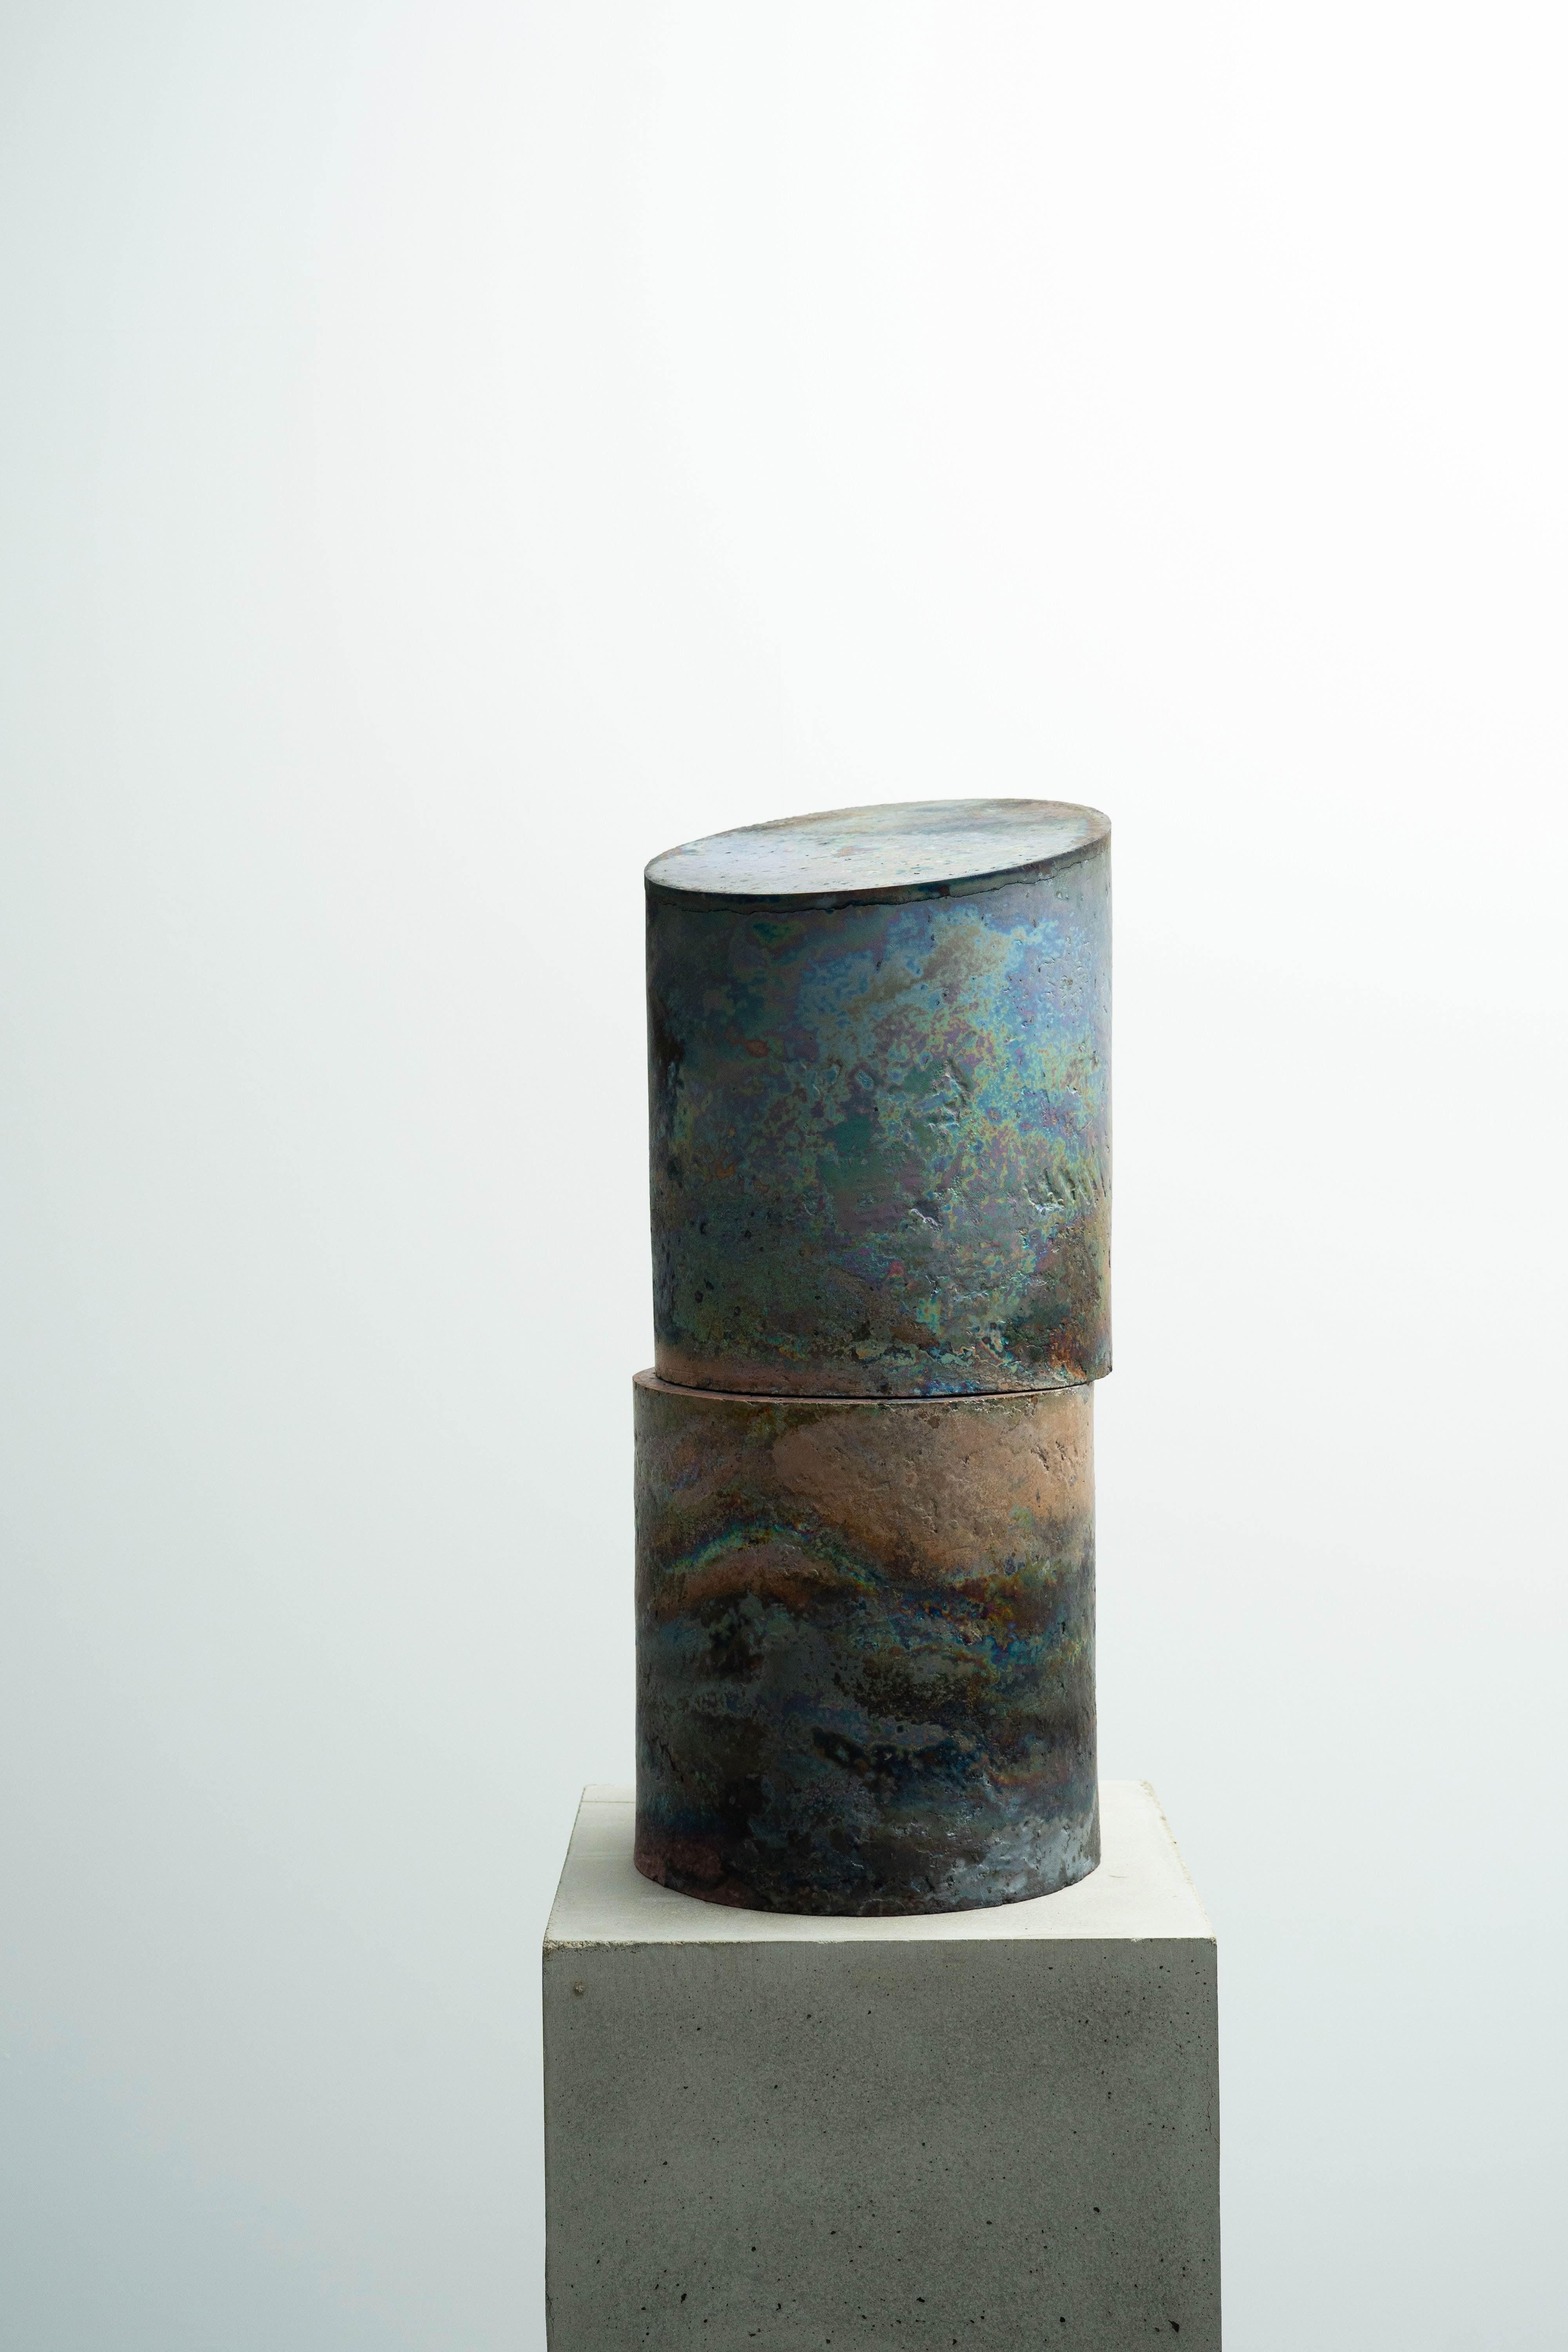 Ceramic Artwork handmade by Tomonari Hashimoto
Dimensions: W 28 x D 28 x H 60.5 cm
Materials: Stoneware Cray, Oxide Metal, Glaze


1990 Born in Wakayama Pref. in Japan
2017 PhD, Kanazawa University of Art
In 2008, he entered the Kyoto